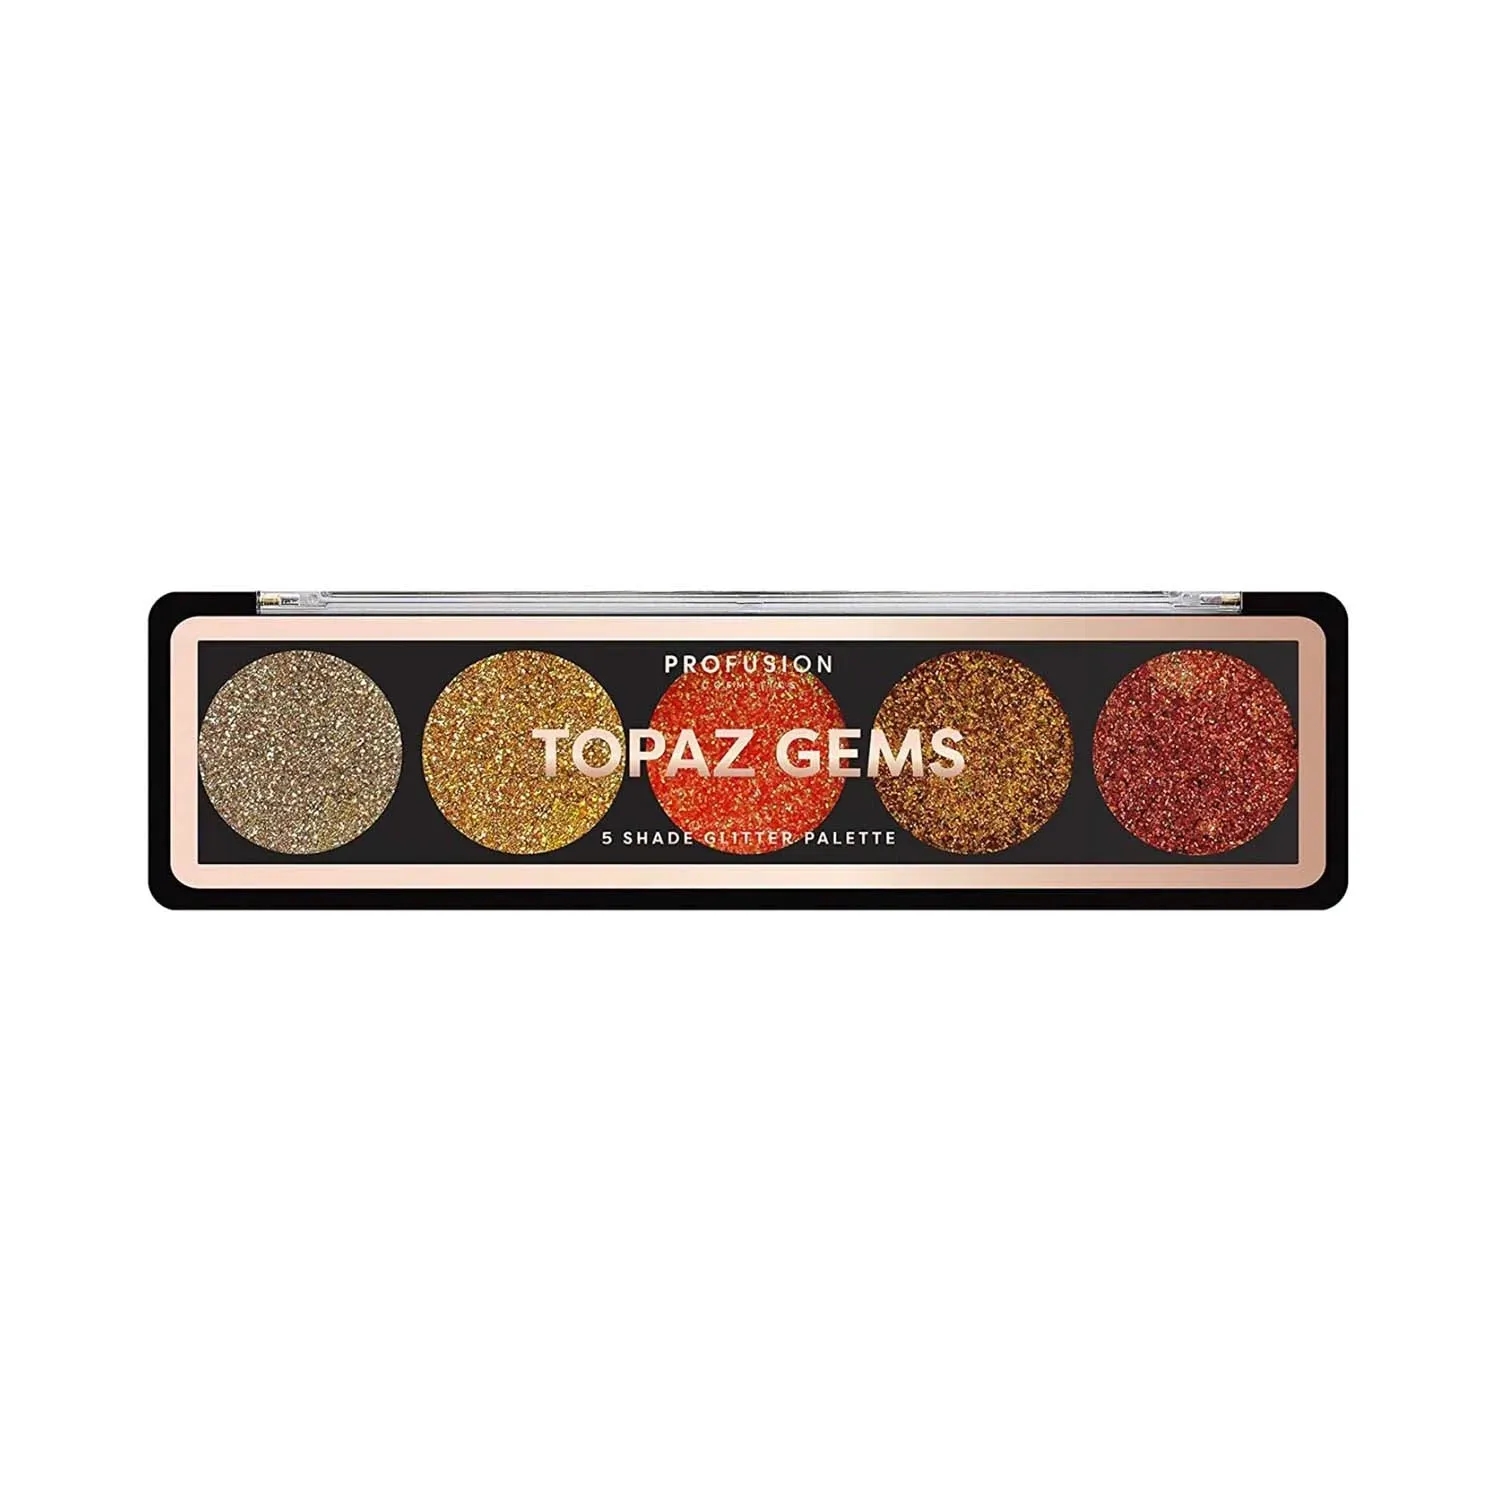 Profusion Cosmetics | Profusion Cosmetics 5 Shade Glitter Eye Shadow Pallete - Topaz Gems (4.5g)